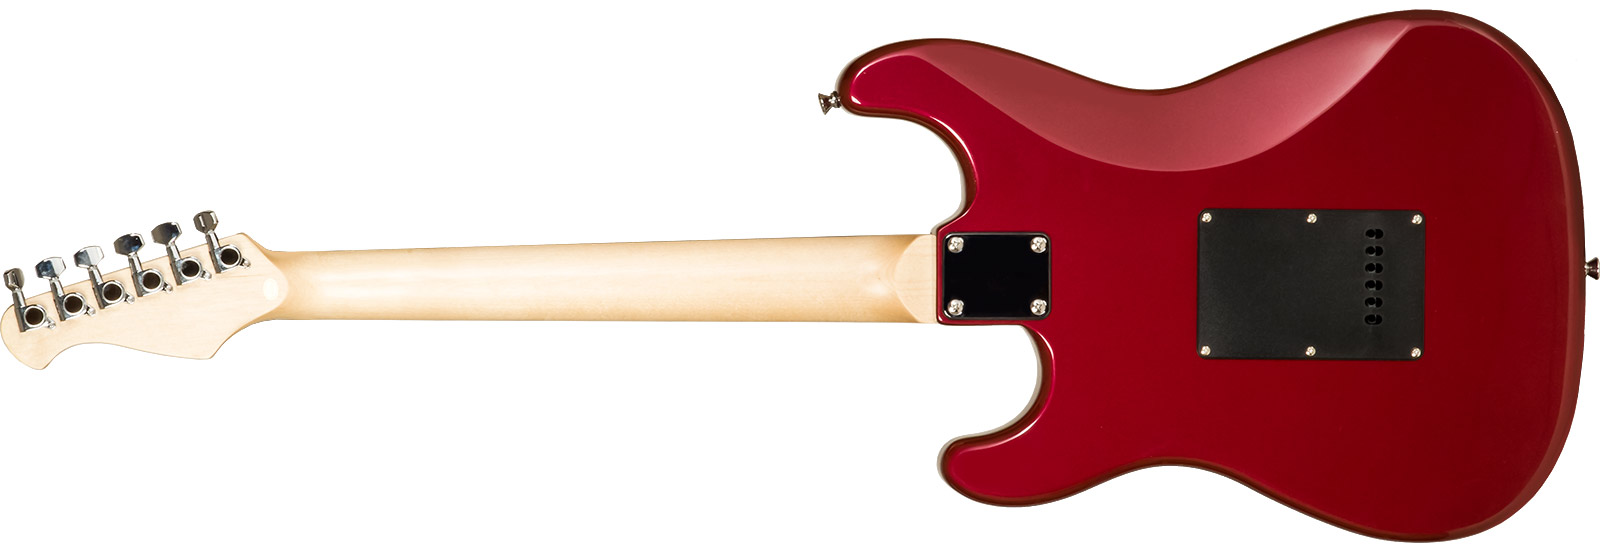 Eastone Str70t 3s Trem Pur - Dark Red - Guitarra eléctrica con forma de str. - Variation 6